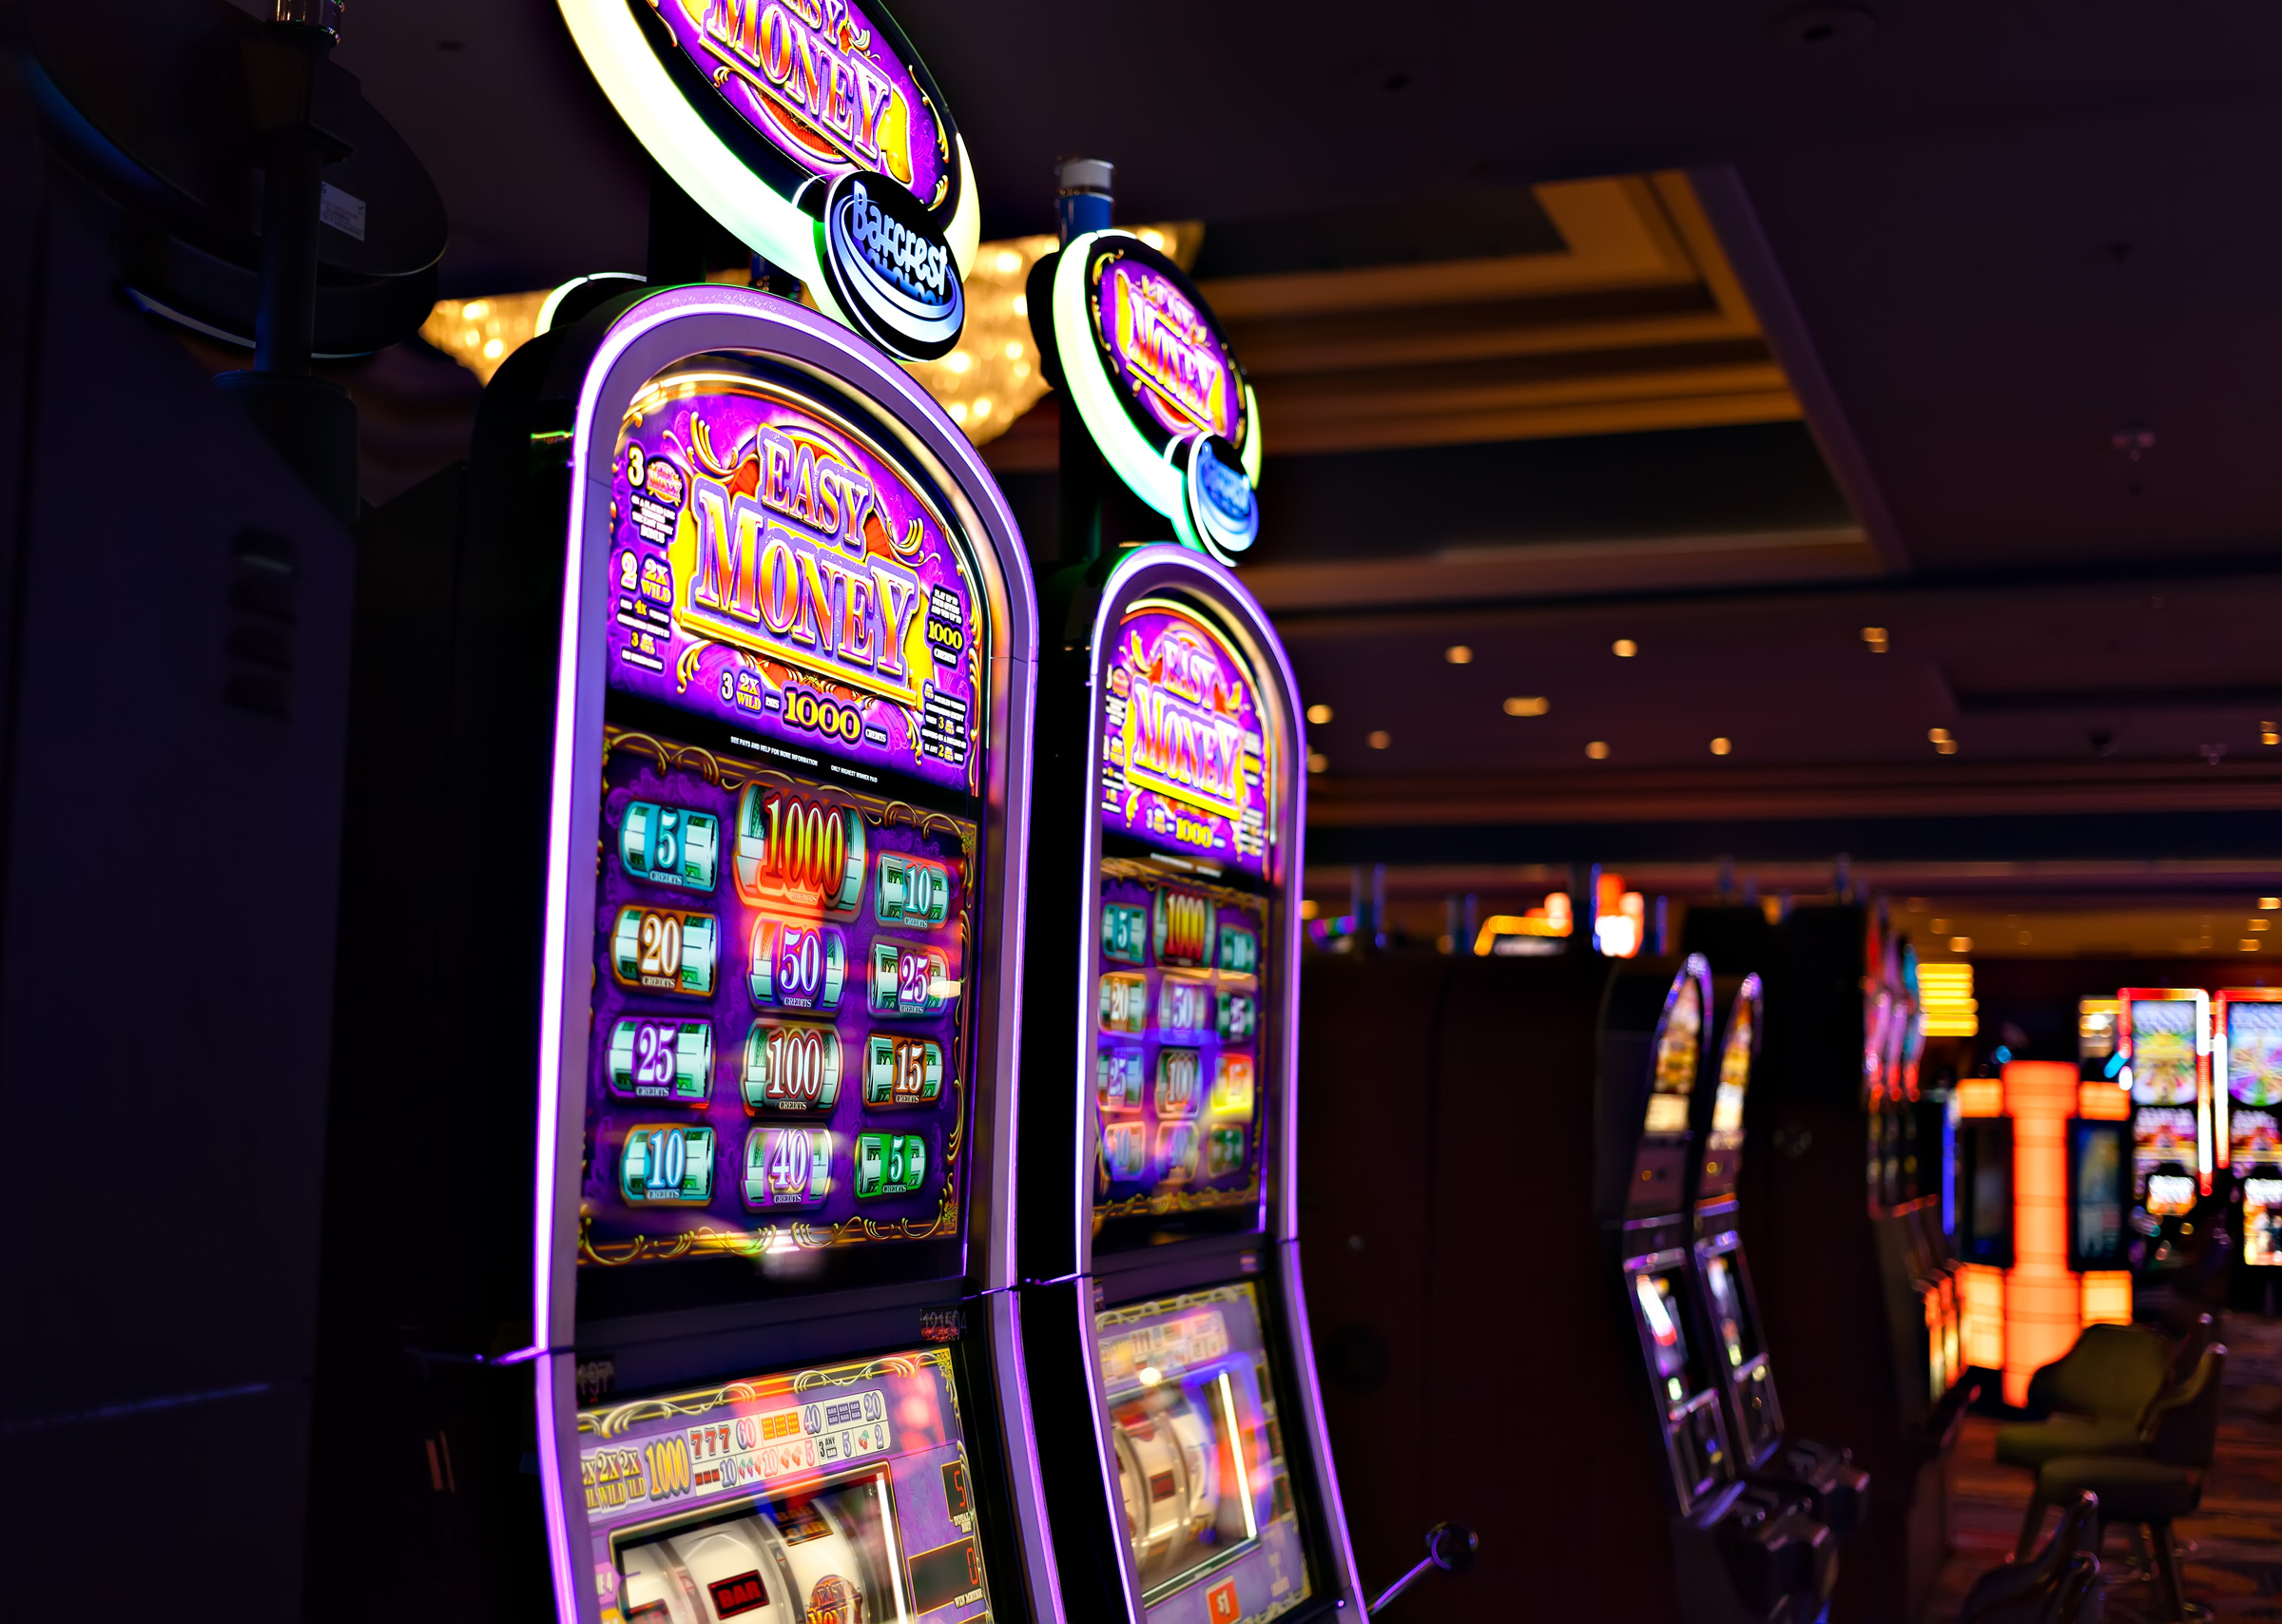 Slot machines (Photo by steve sawusch on Unsplash)